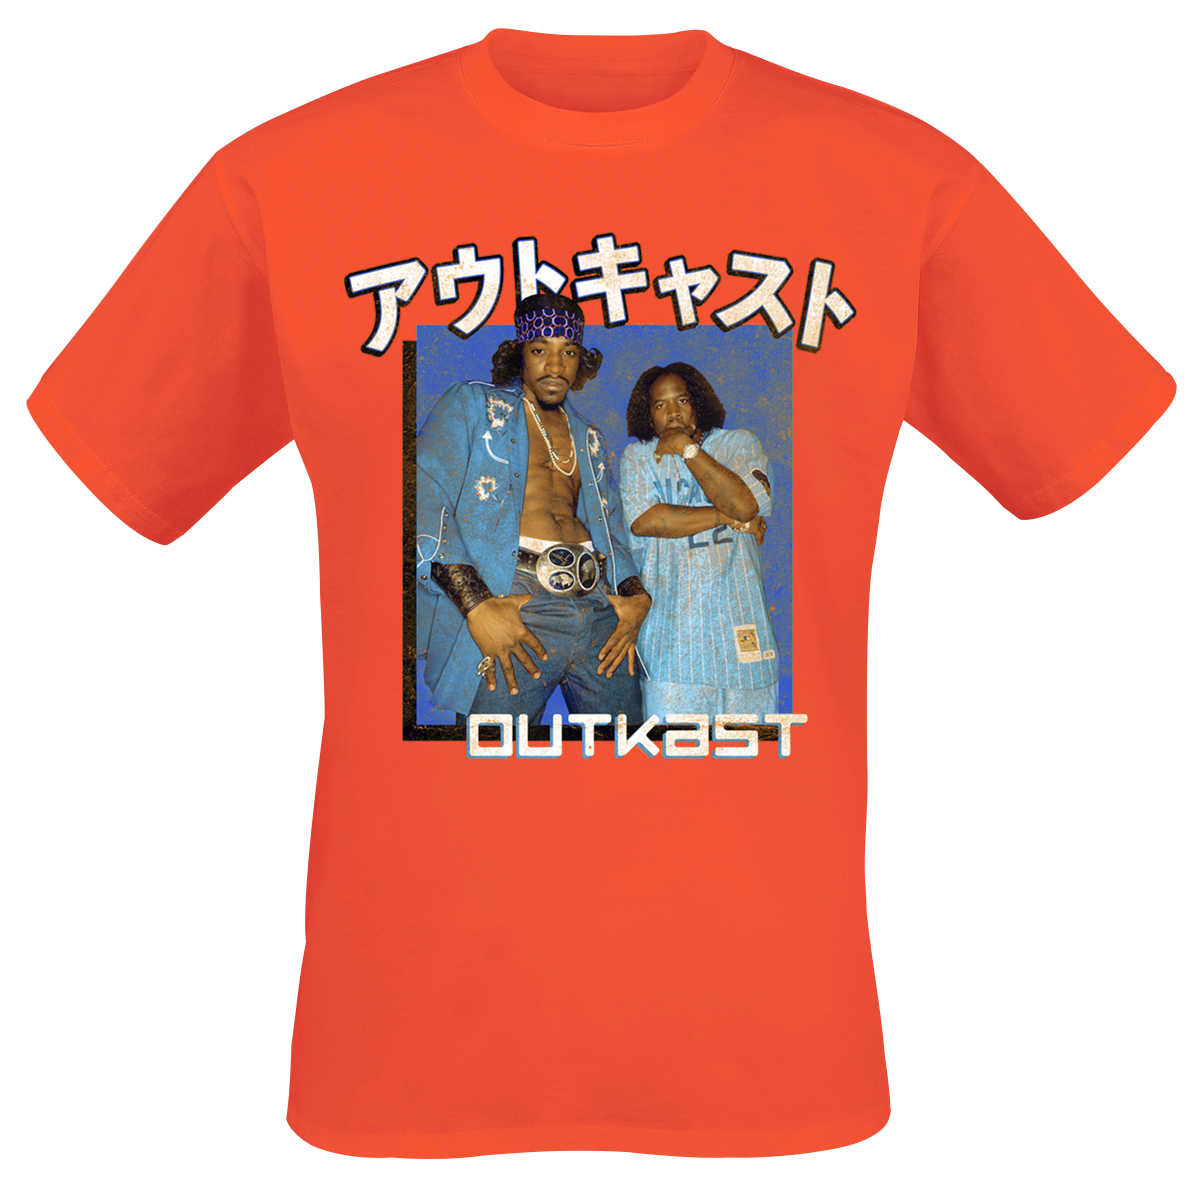 OutKast -  - T-Shirt - orange image